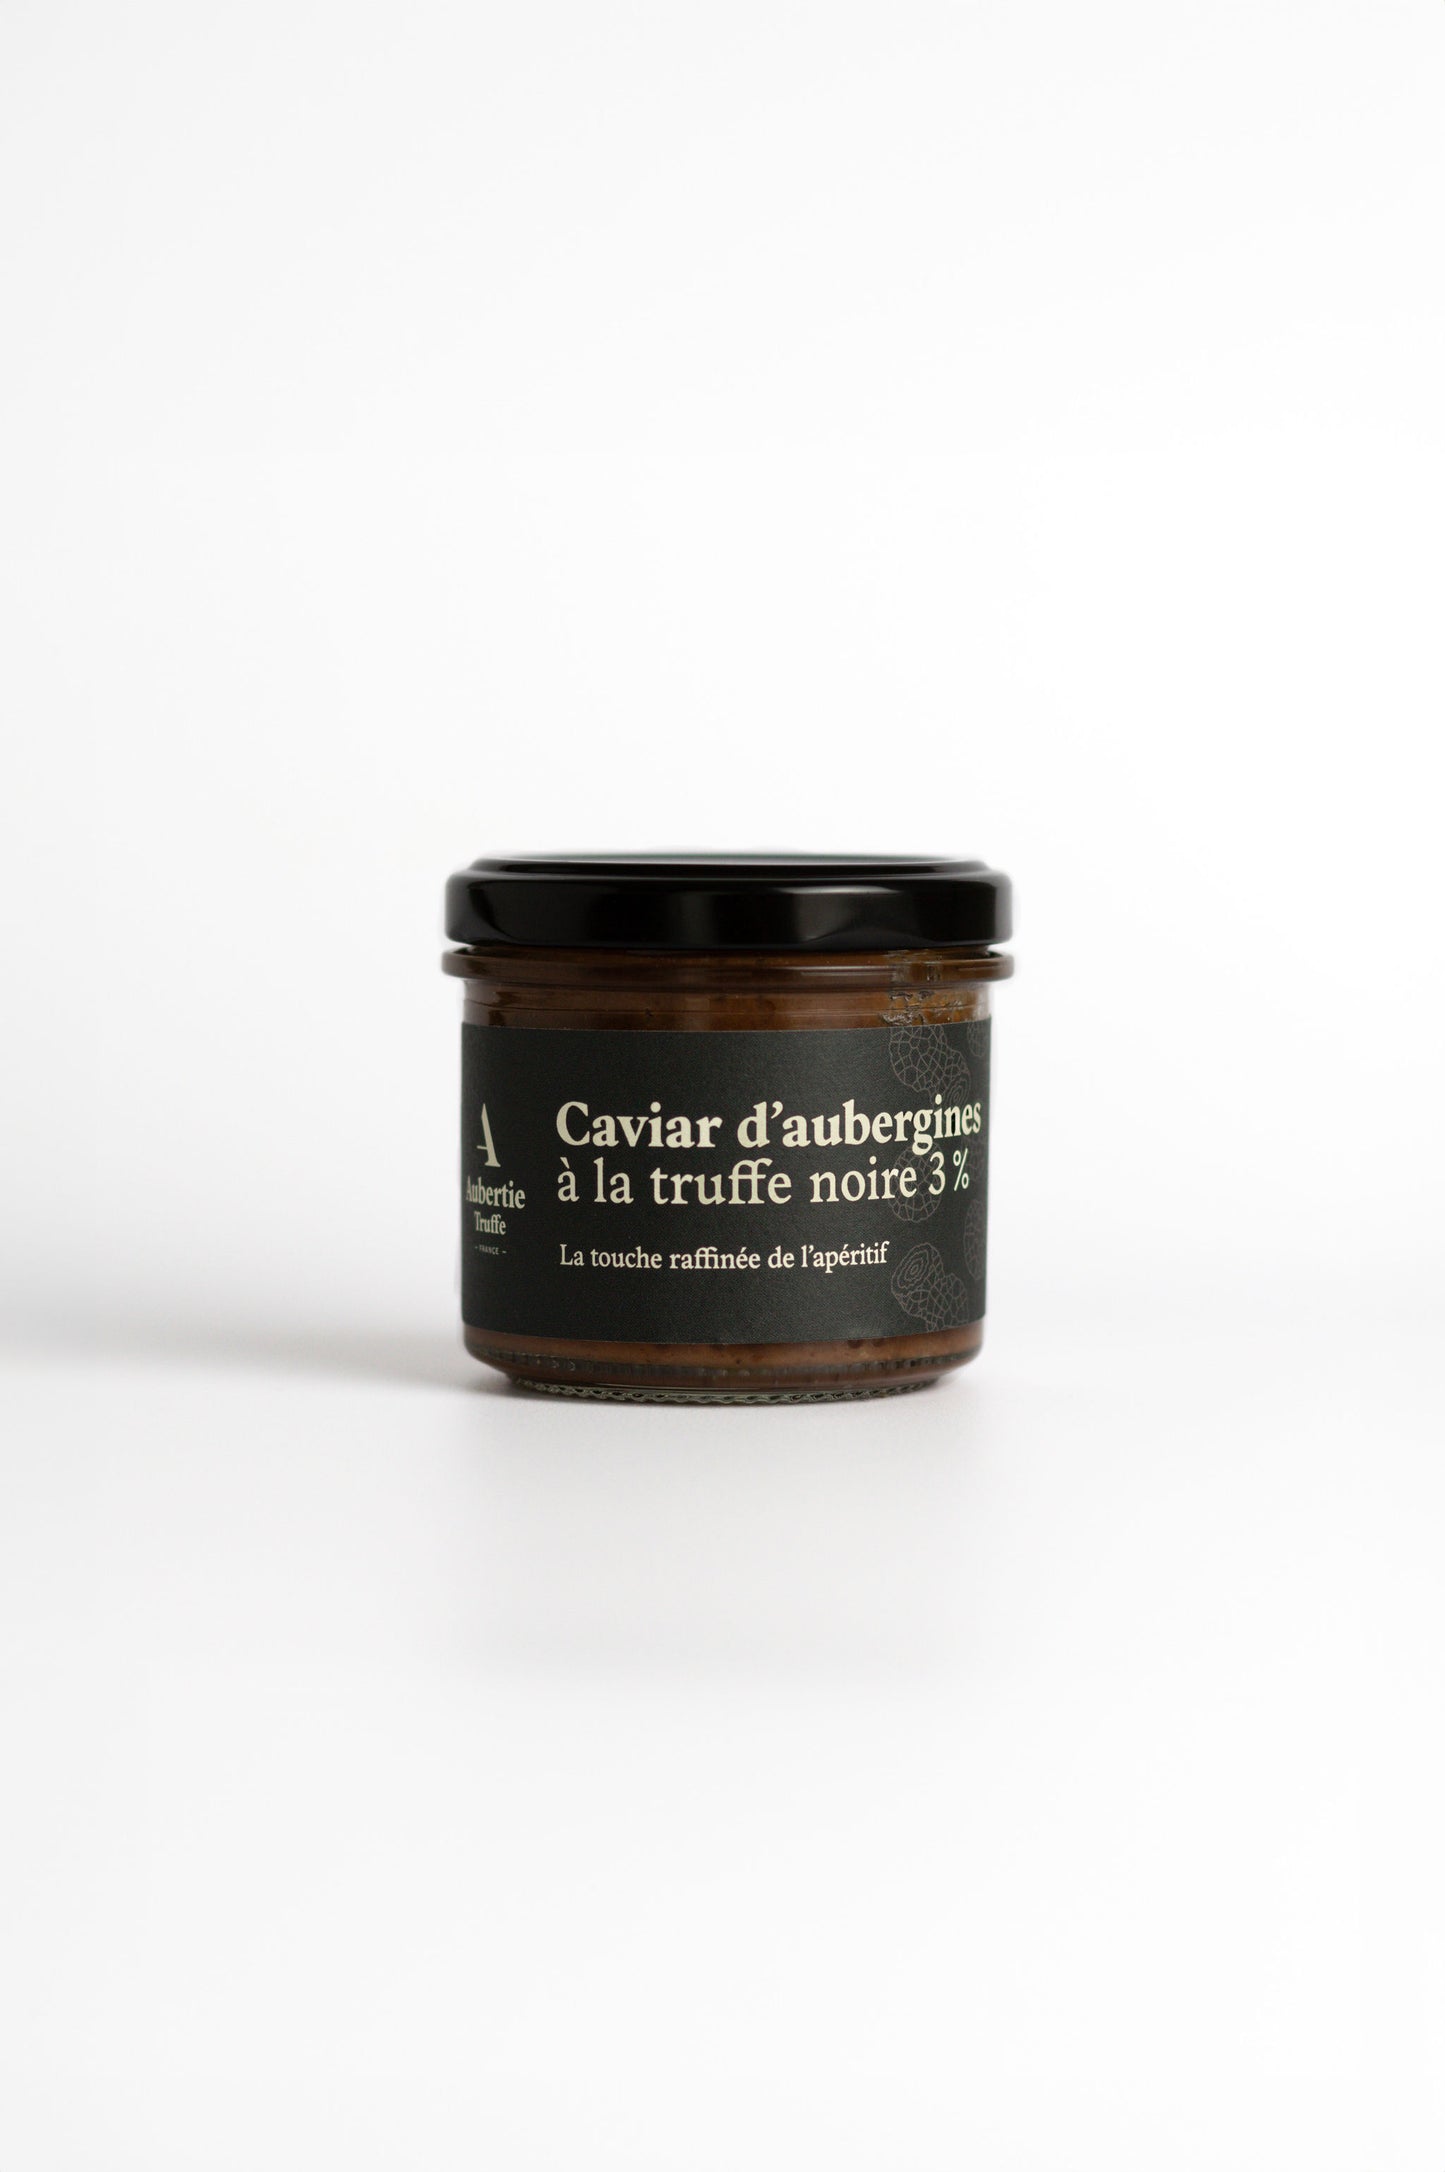 Caviar d'aubergines à la truffe noire 3%